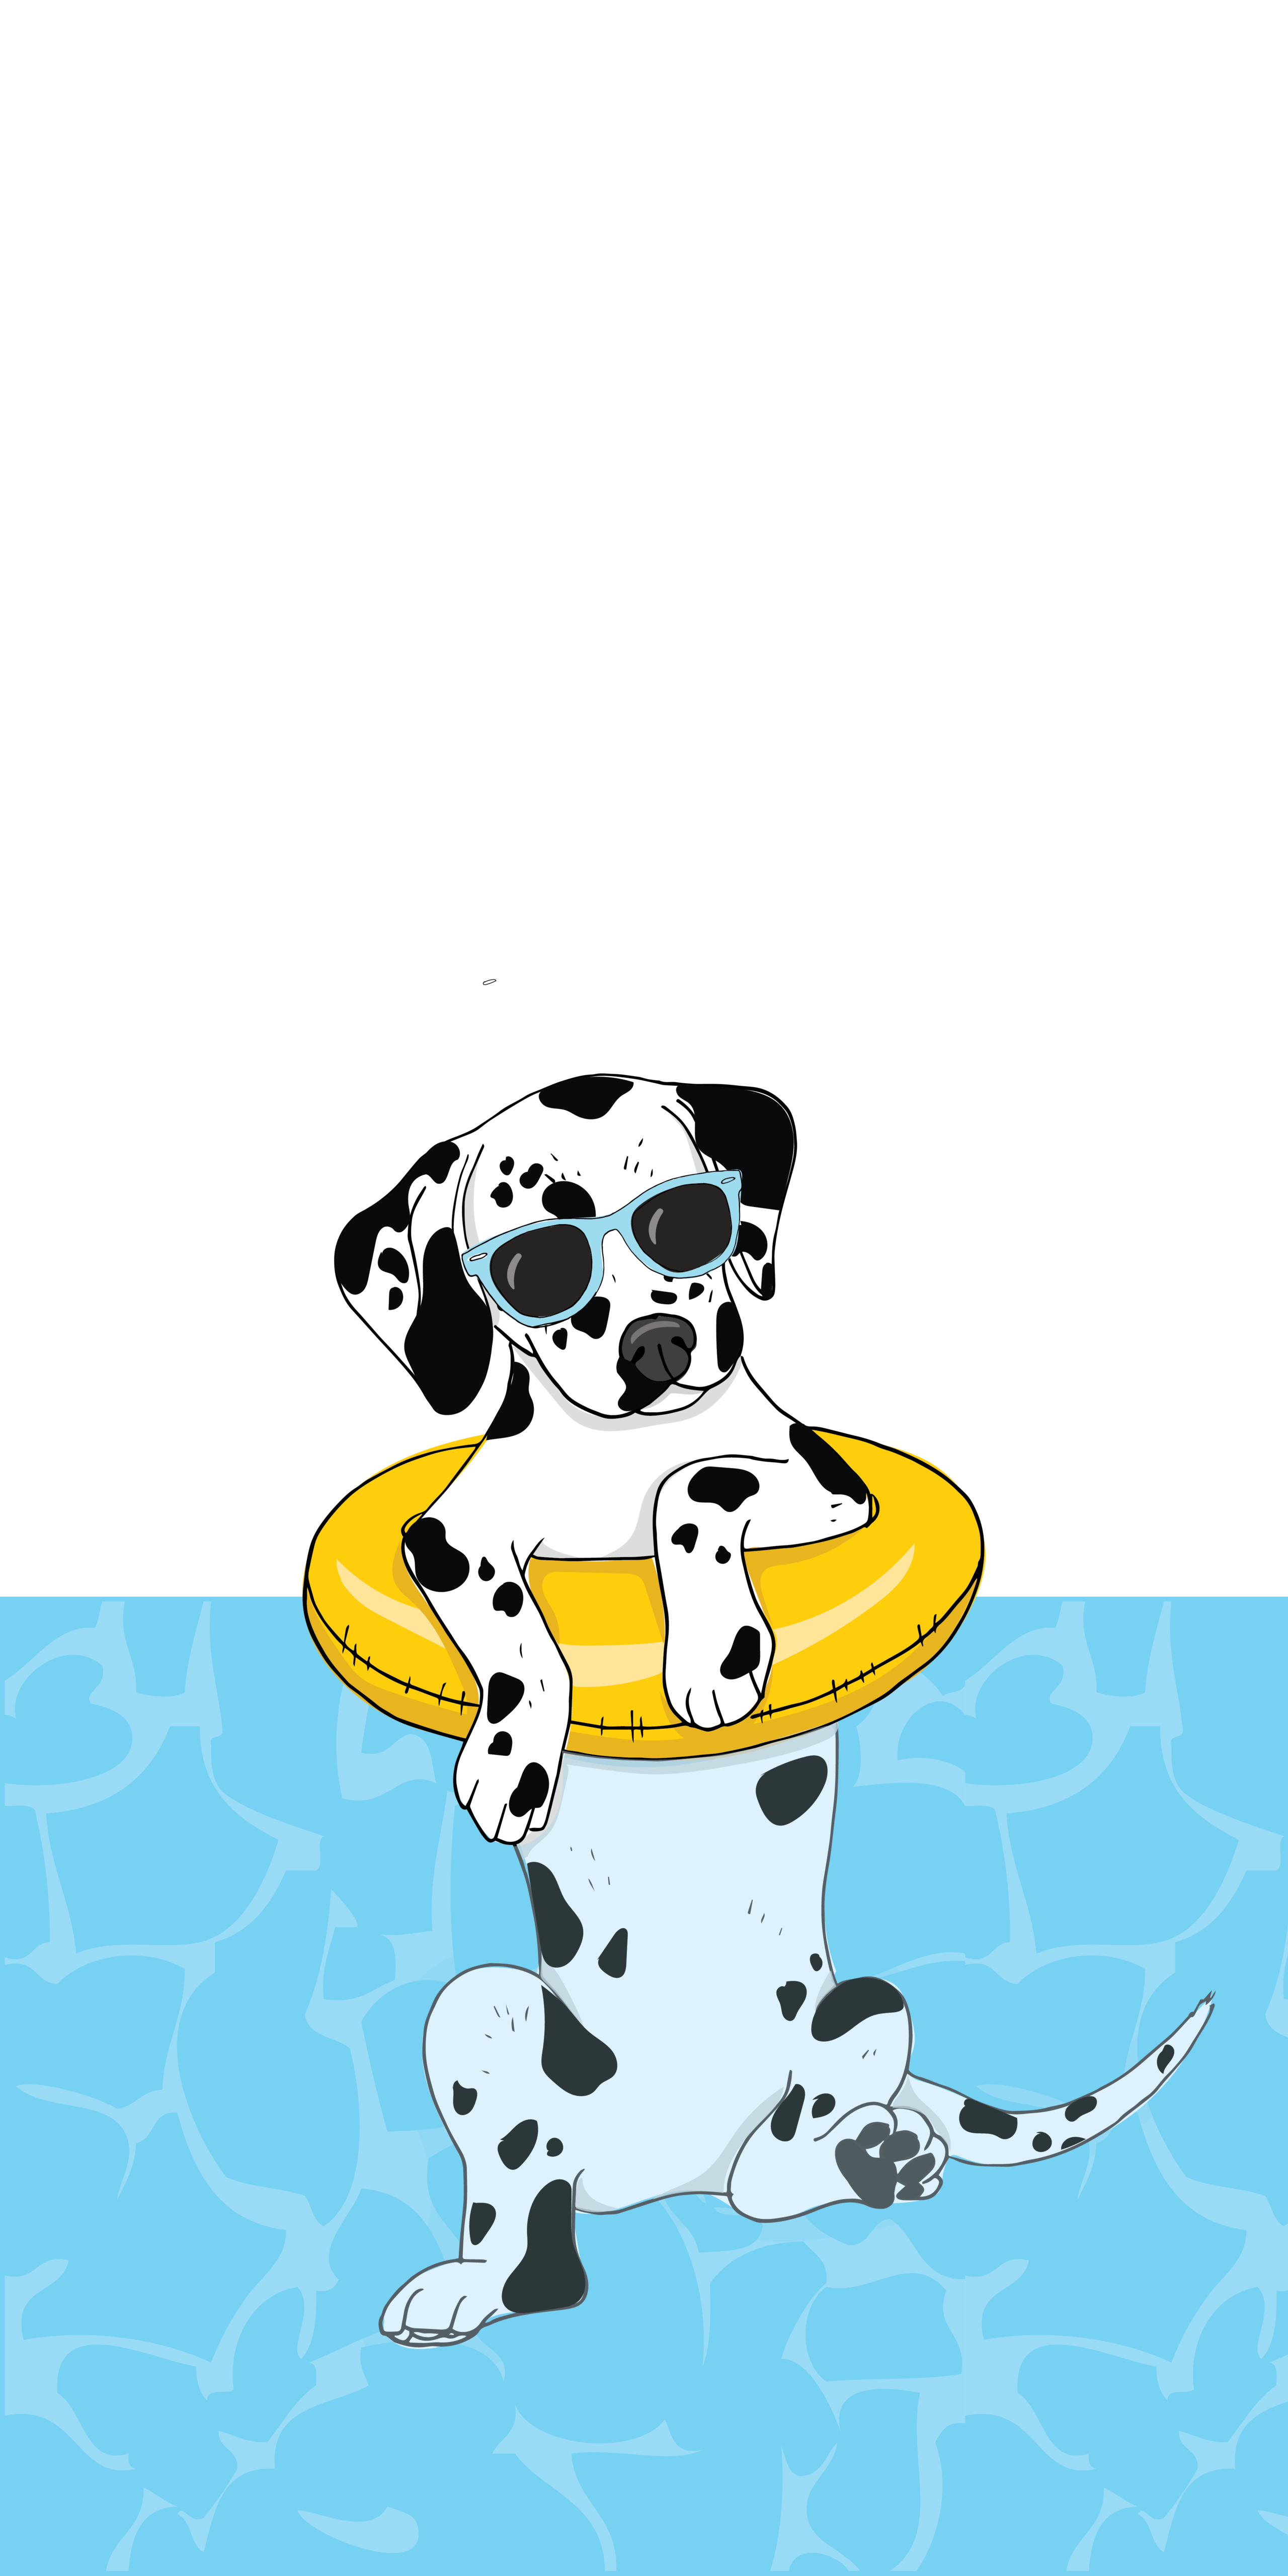 Dalmatian. #Casetify #iPhone #Art #Design #Dog #Animals #Illustration. Dog wallpaper iphone, Dog wallpaper, Dog art